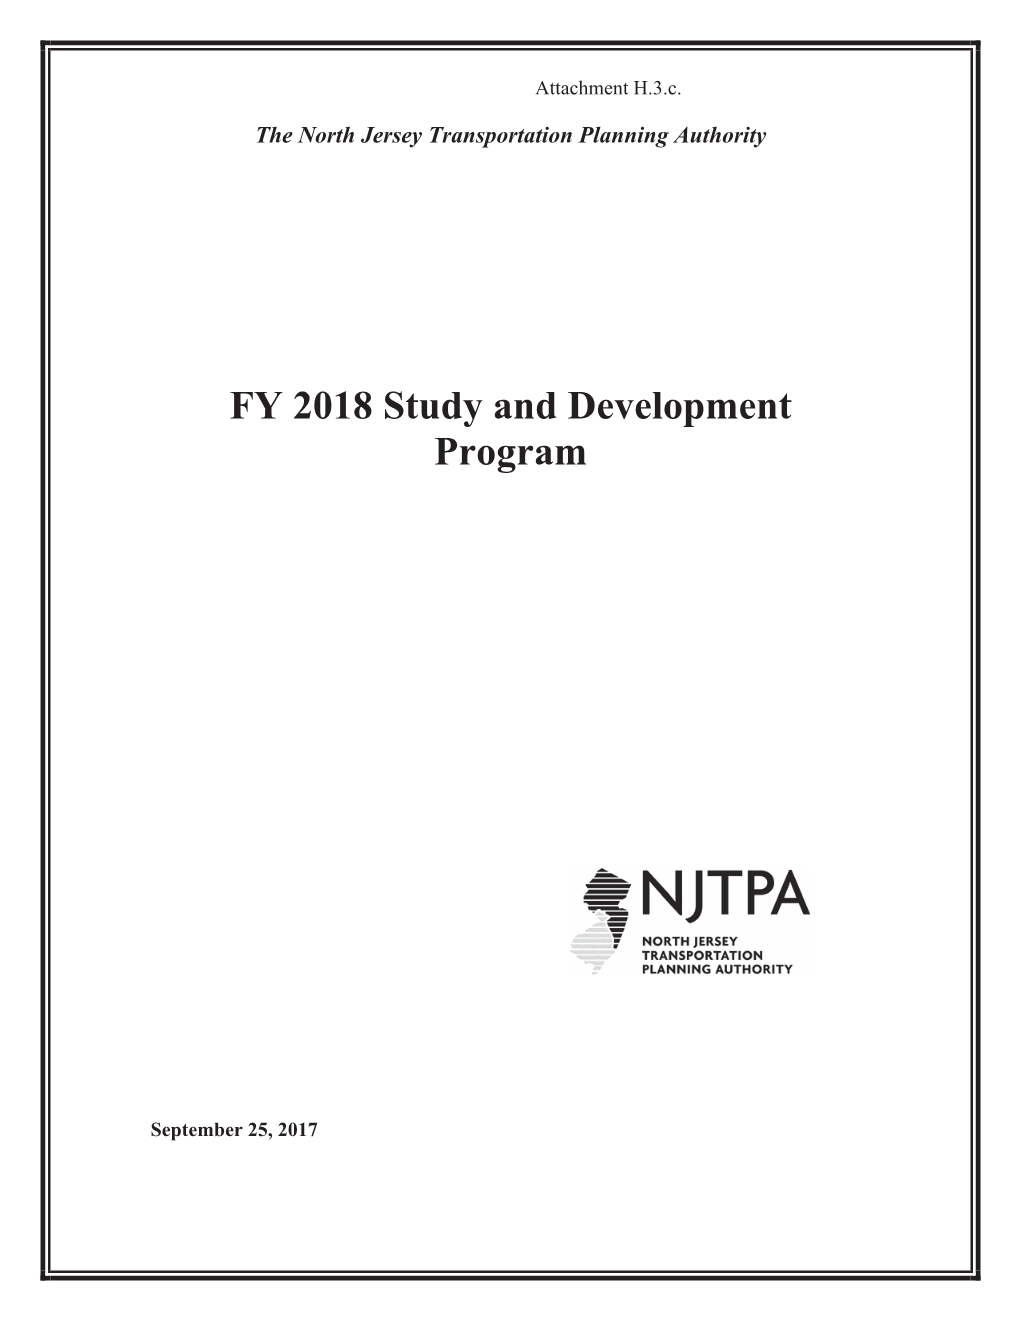 FY 2018 Study and Development Program